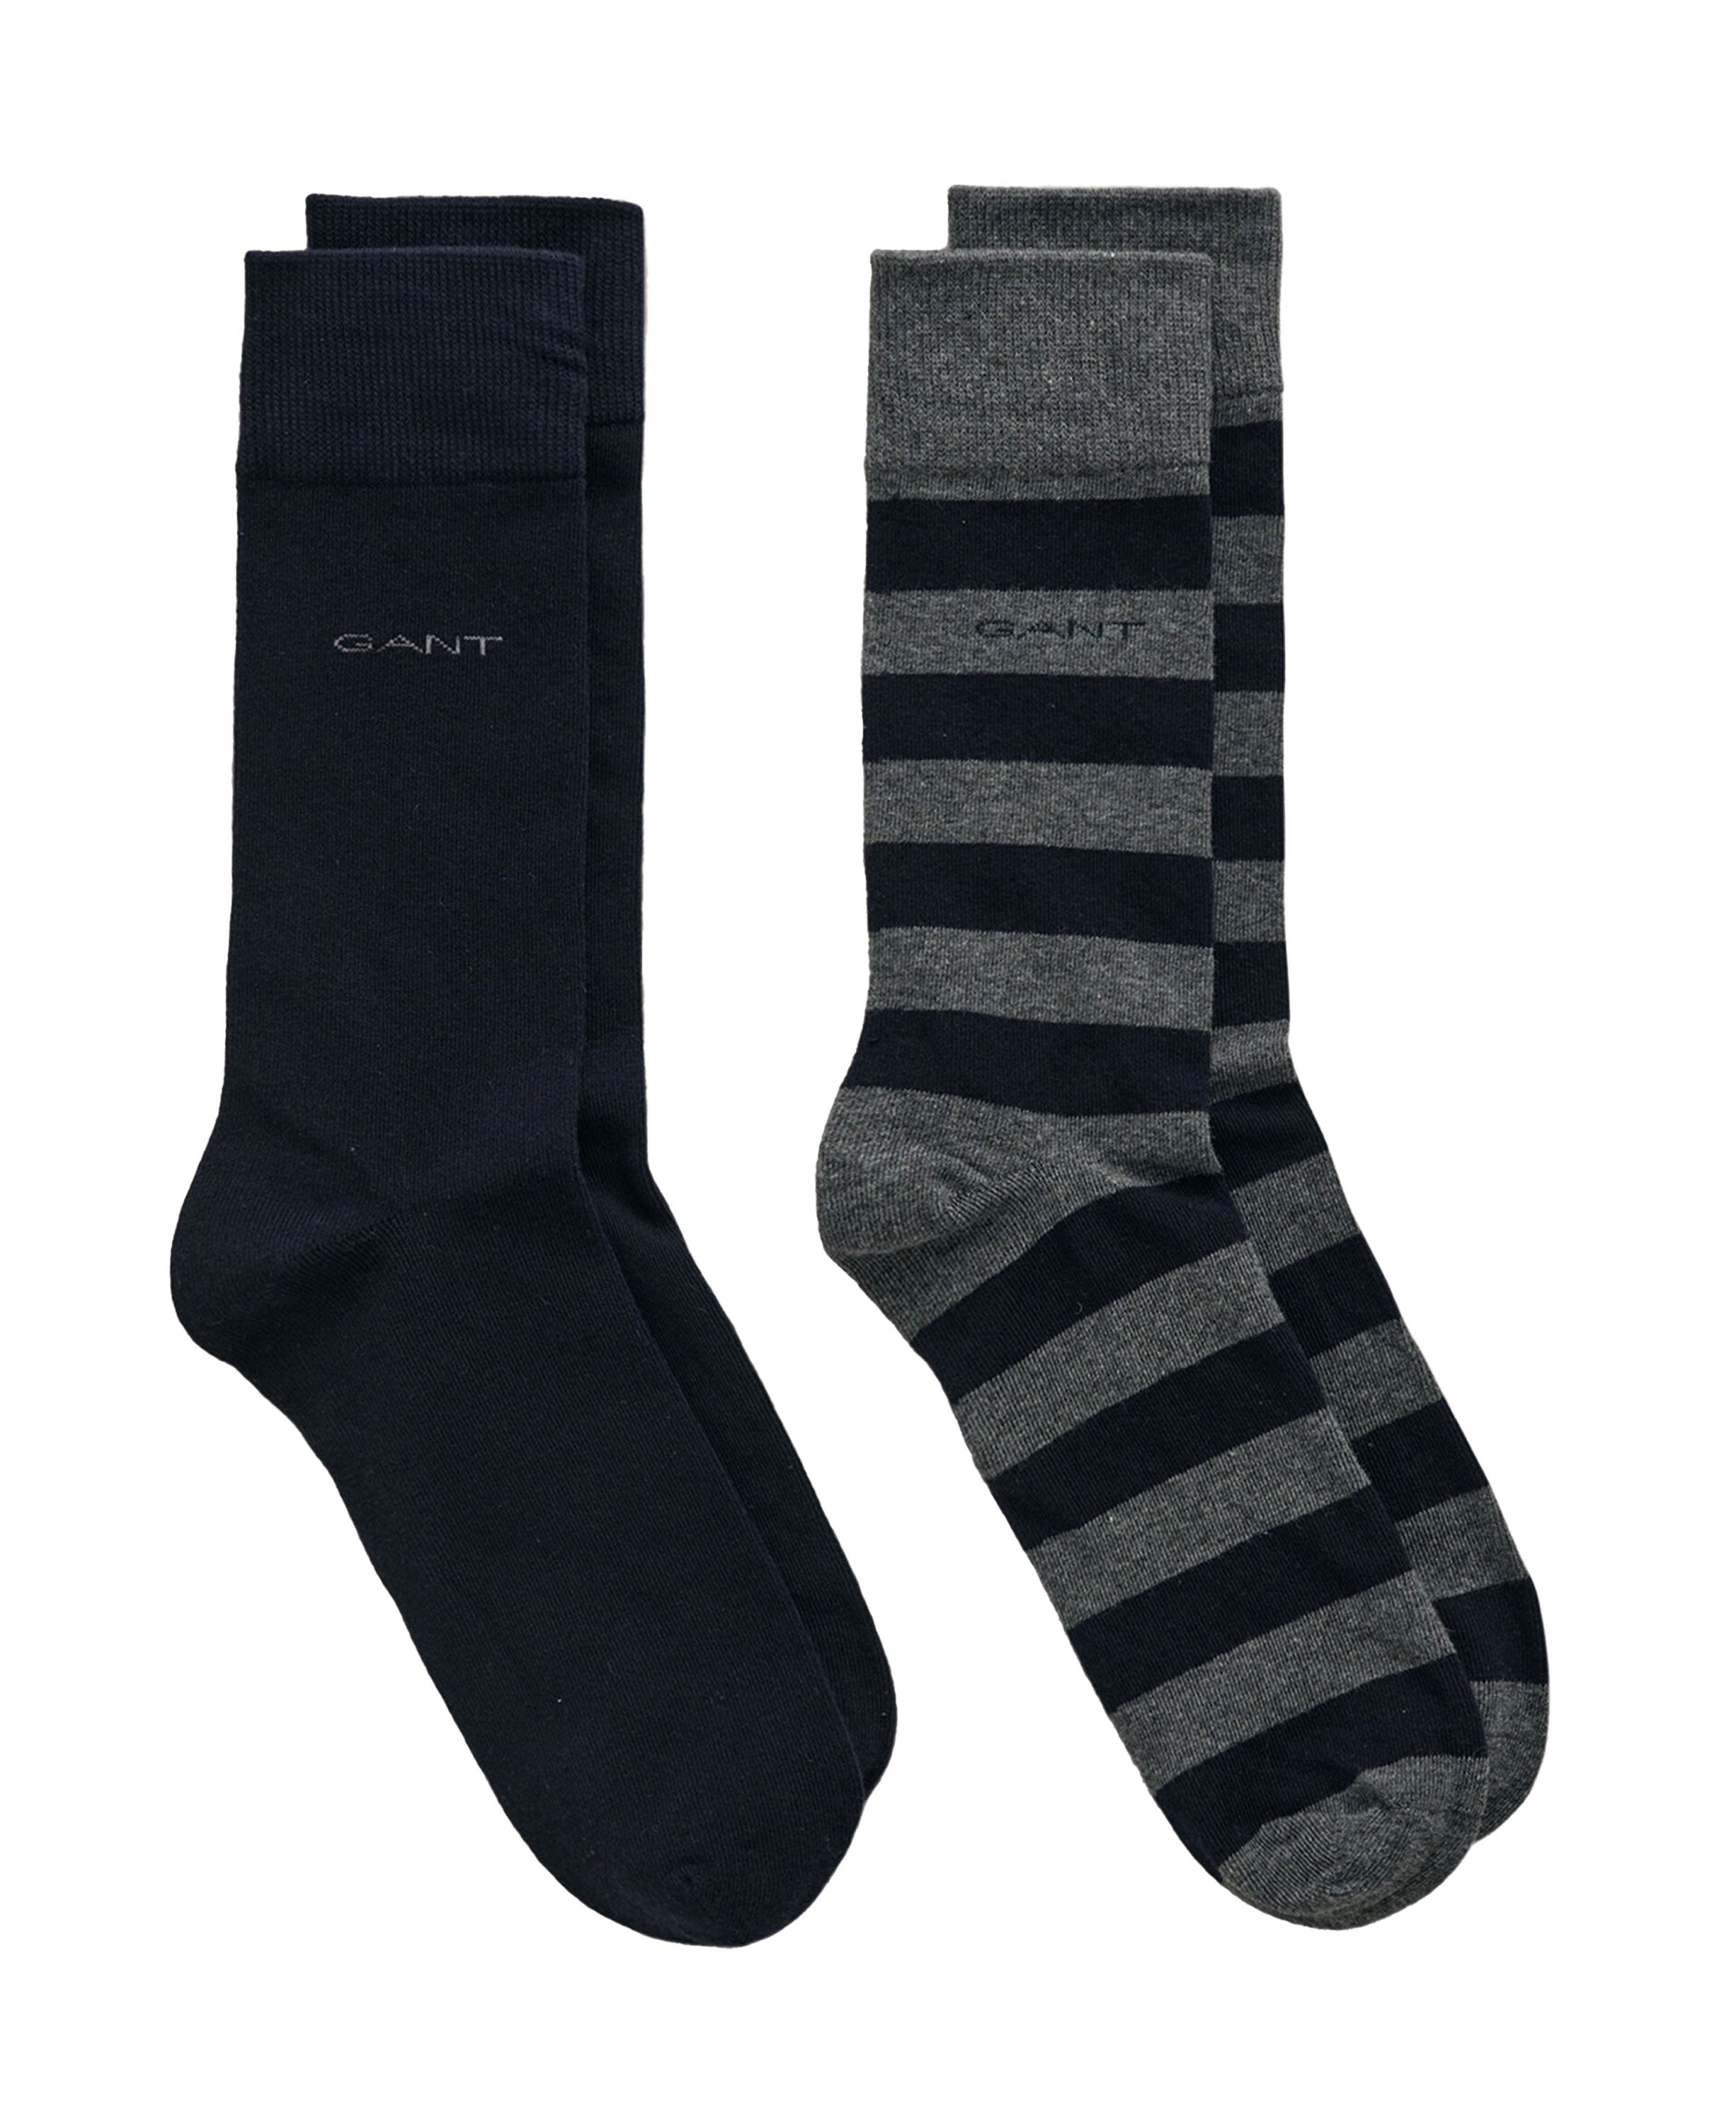 Barstripe And Solid Socks 2-Pack - Charcoal Melange